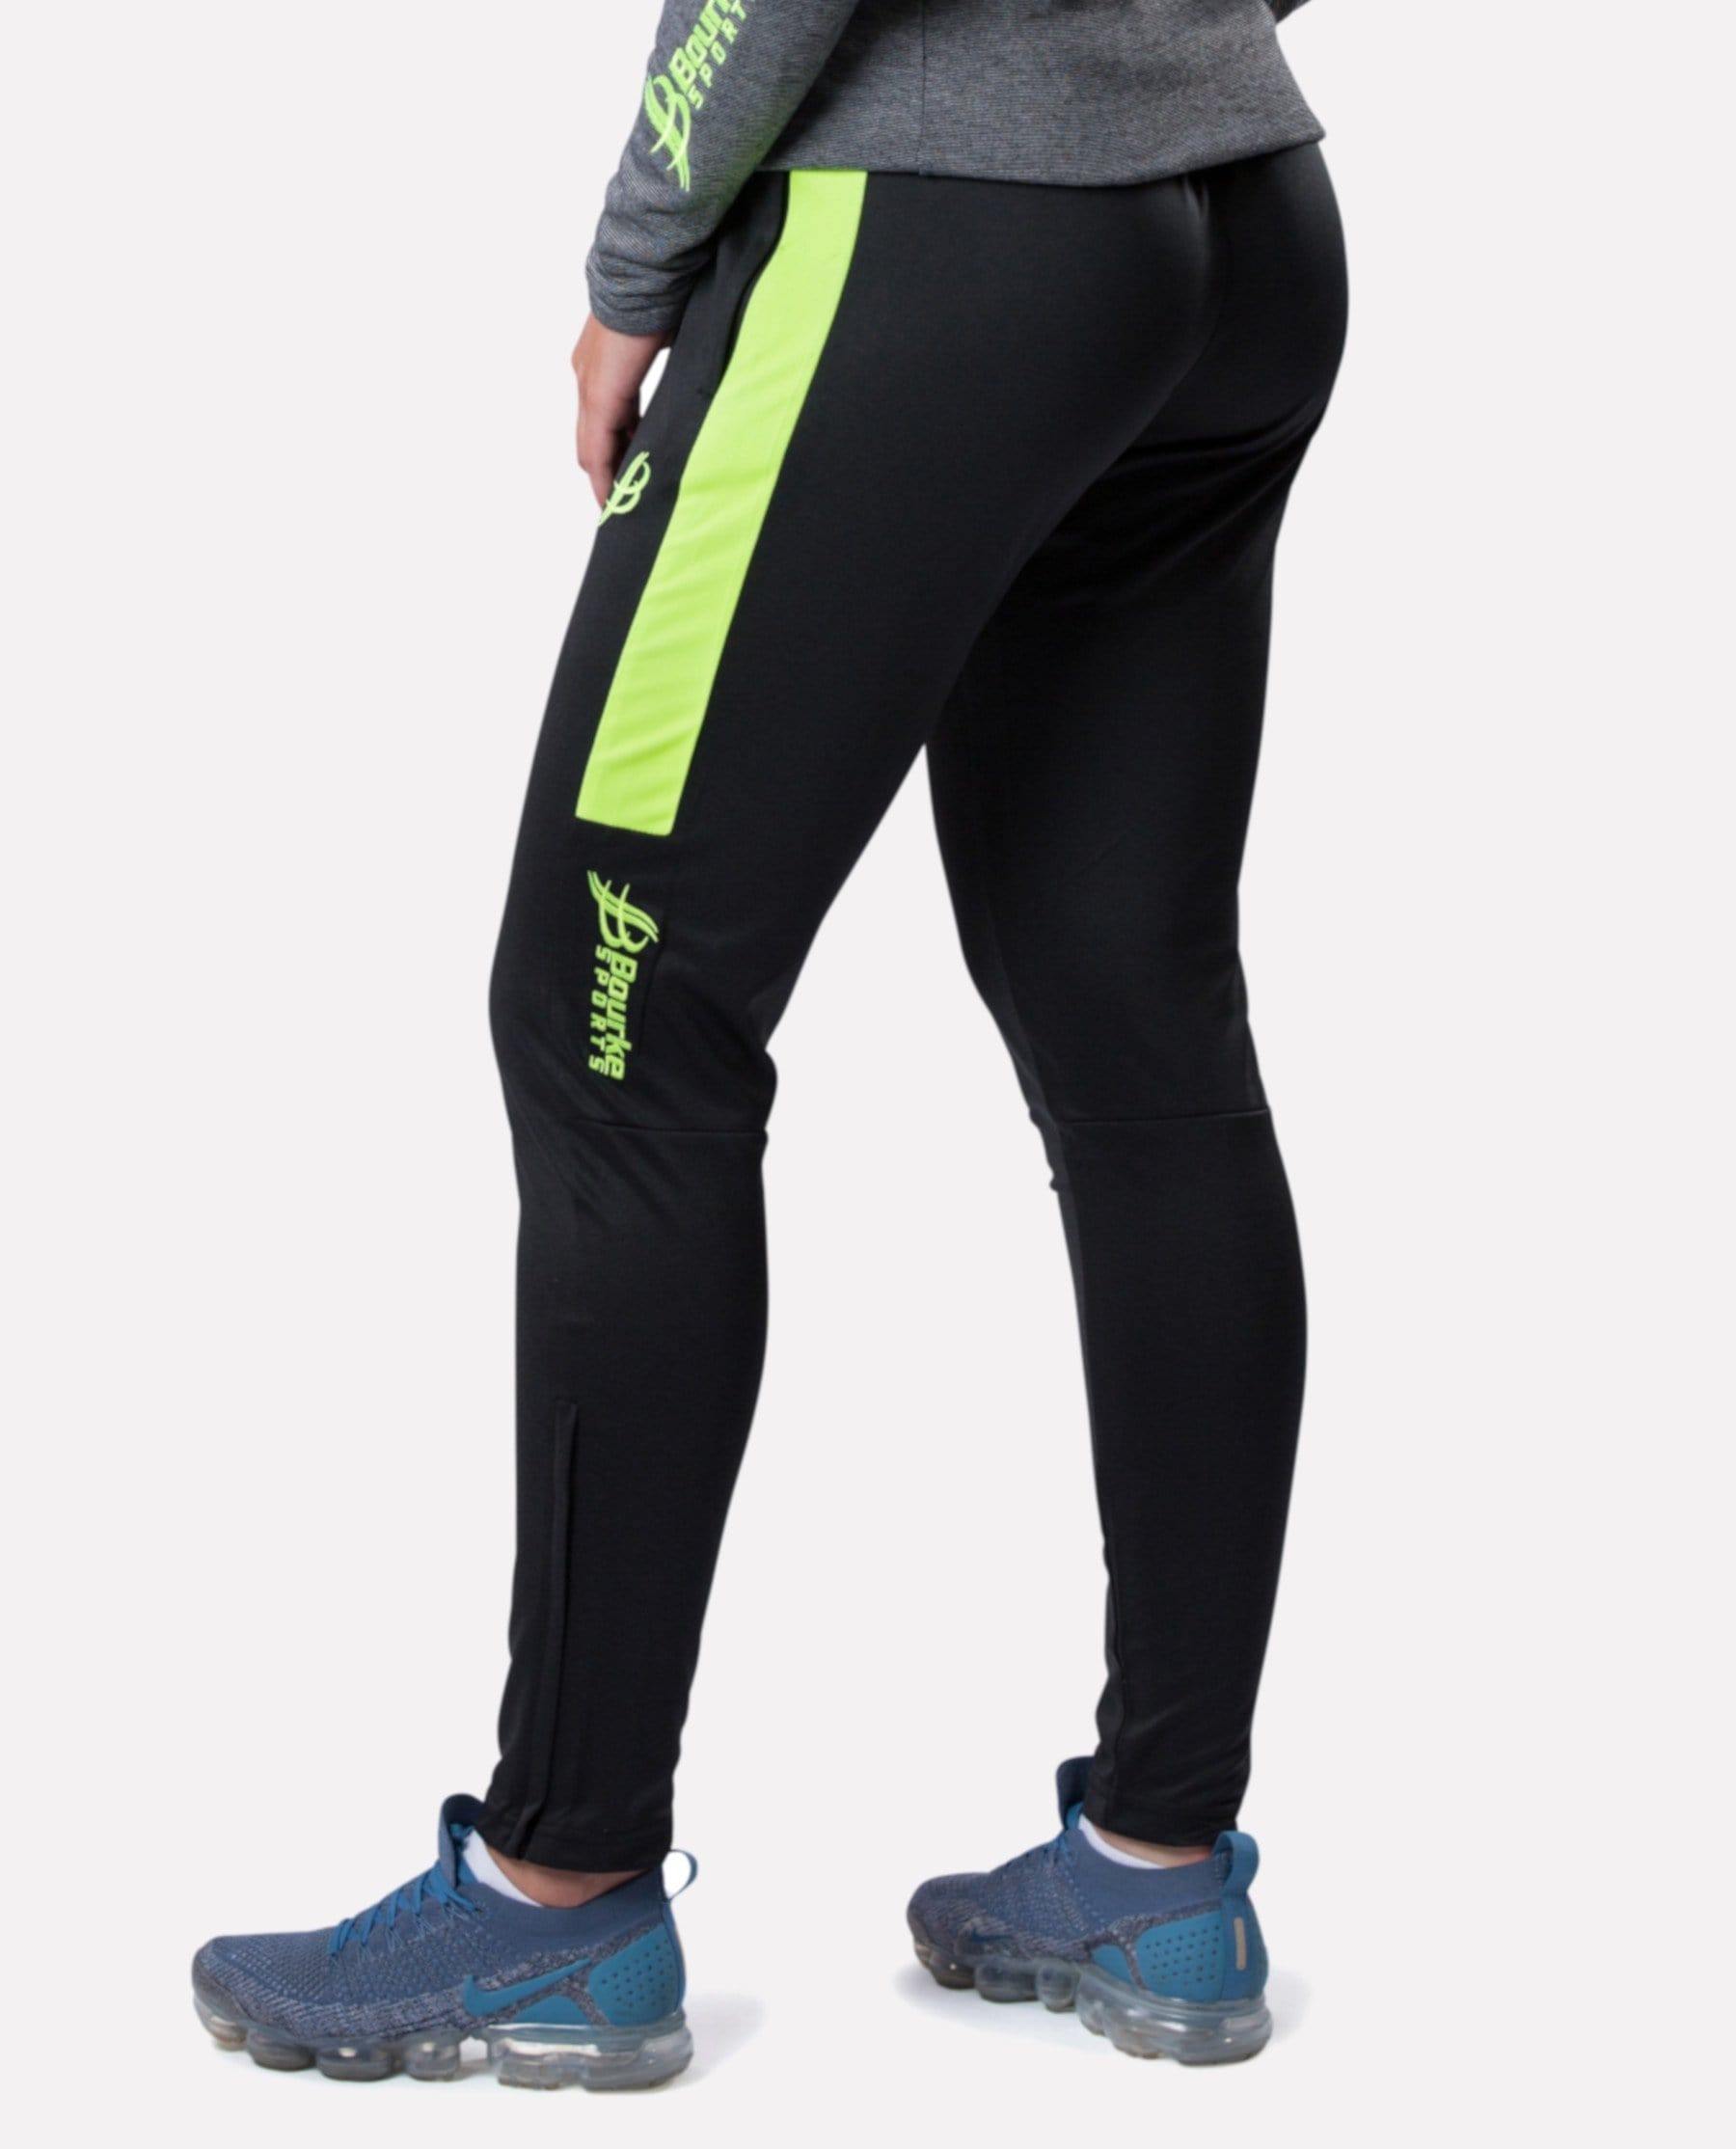 ALPHA Adult Skinny Pants (Black/Luminous) - Bourke Sports Limited